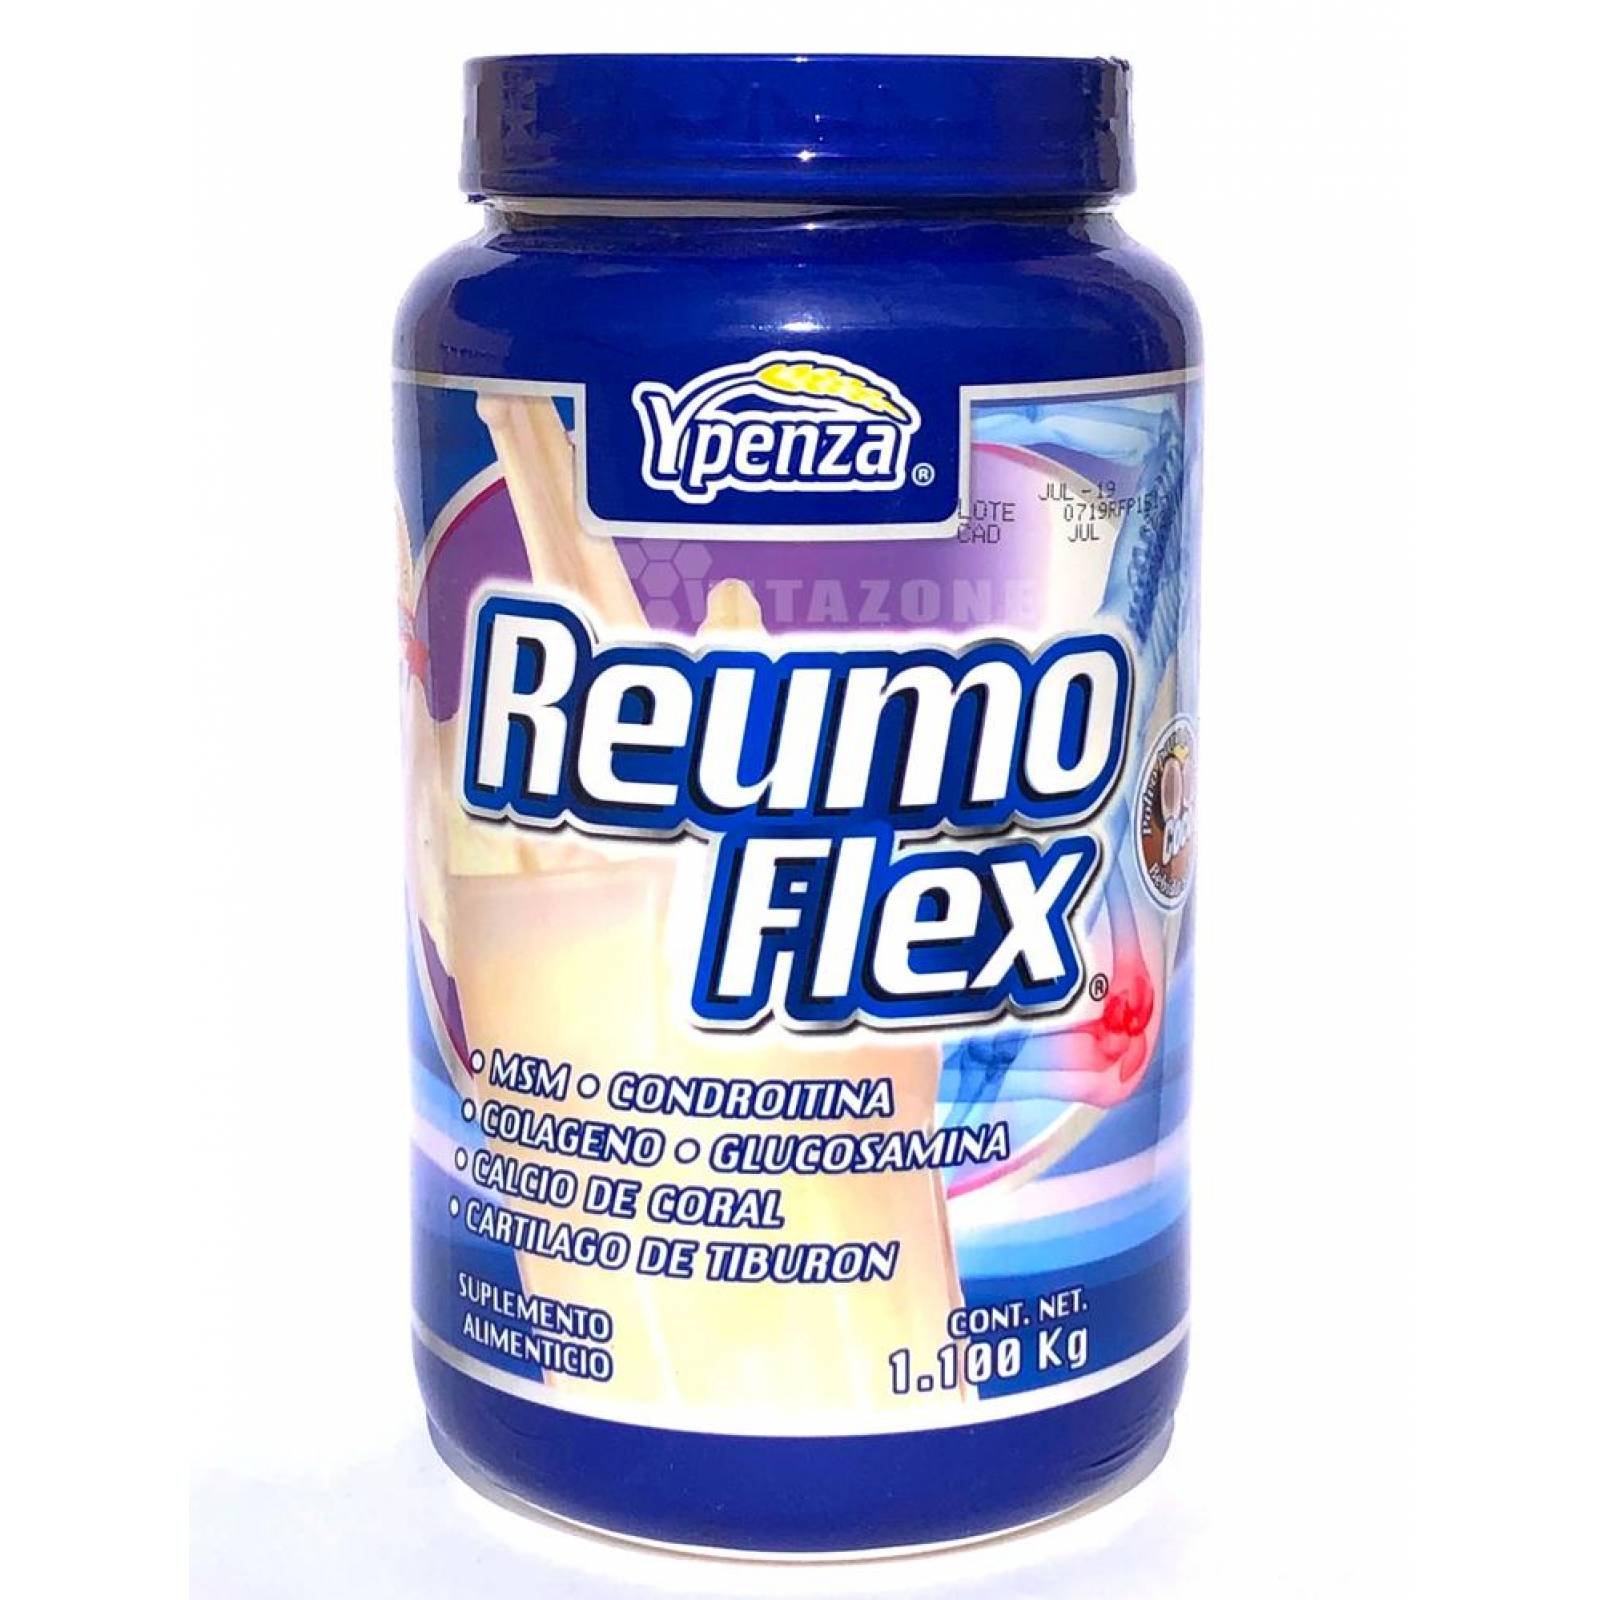 Glucosamina Reumoflex Sabor Coco 1100 g Ypenza. 